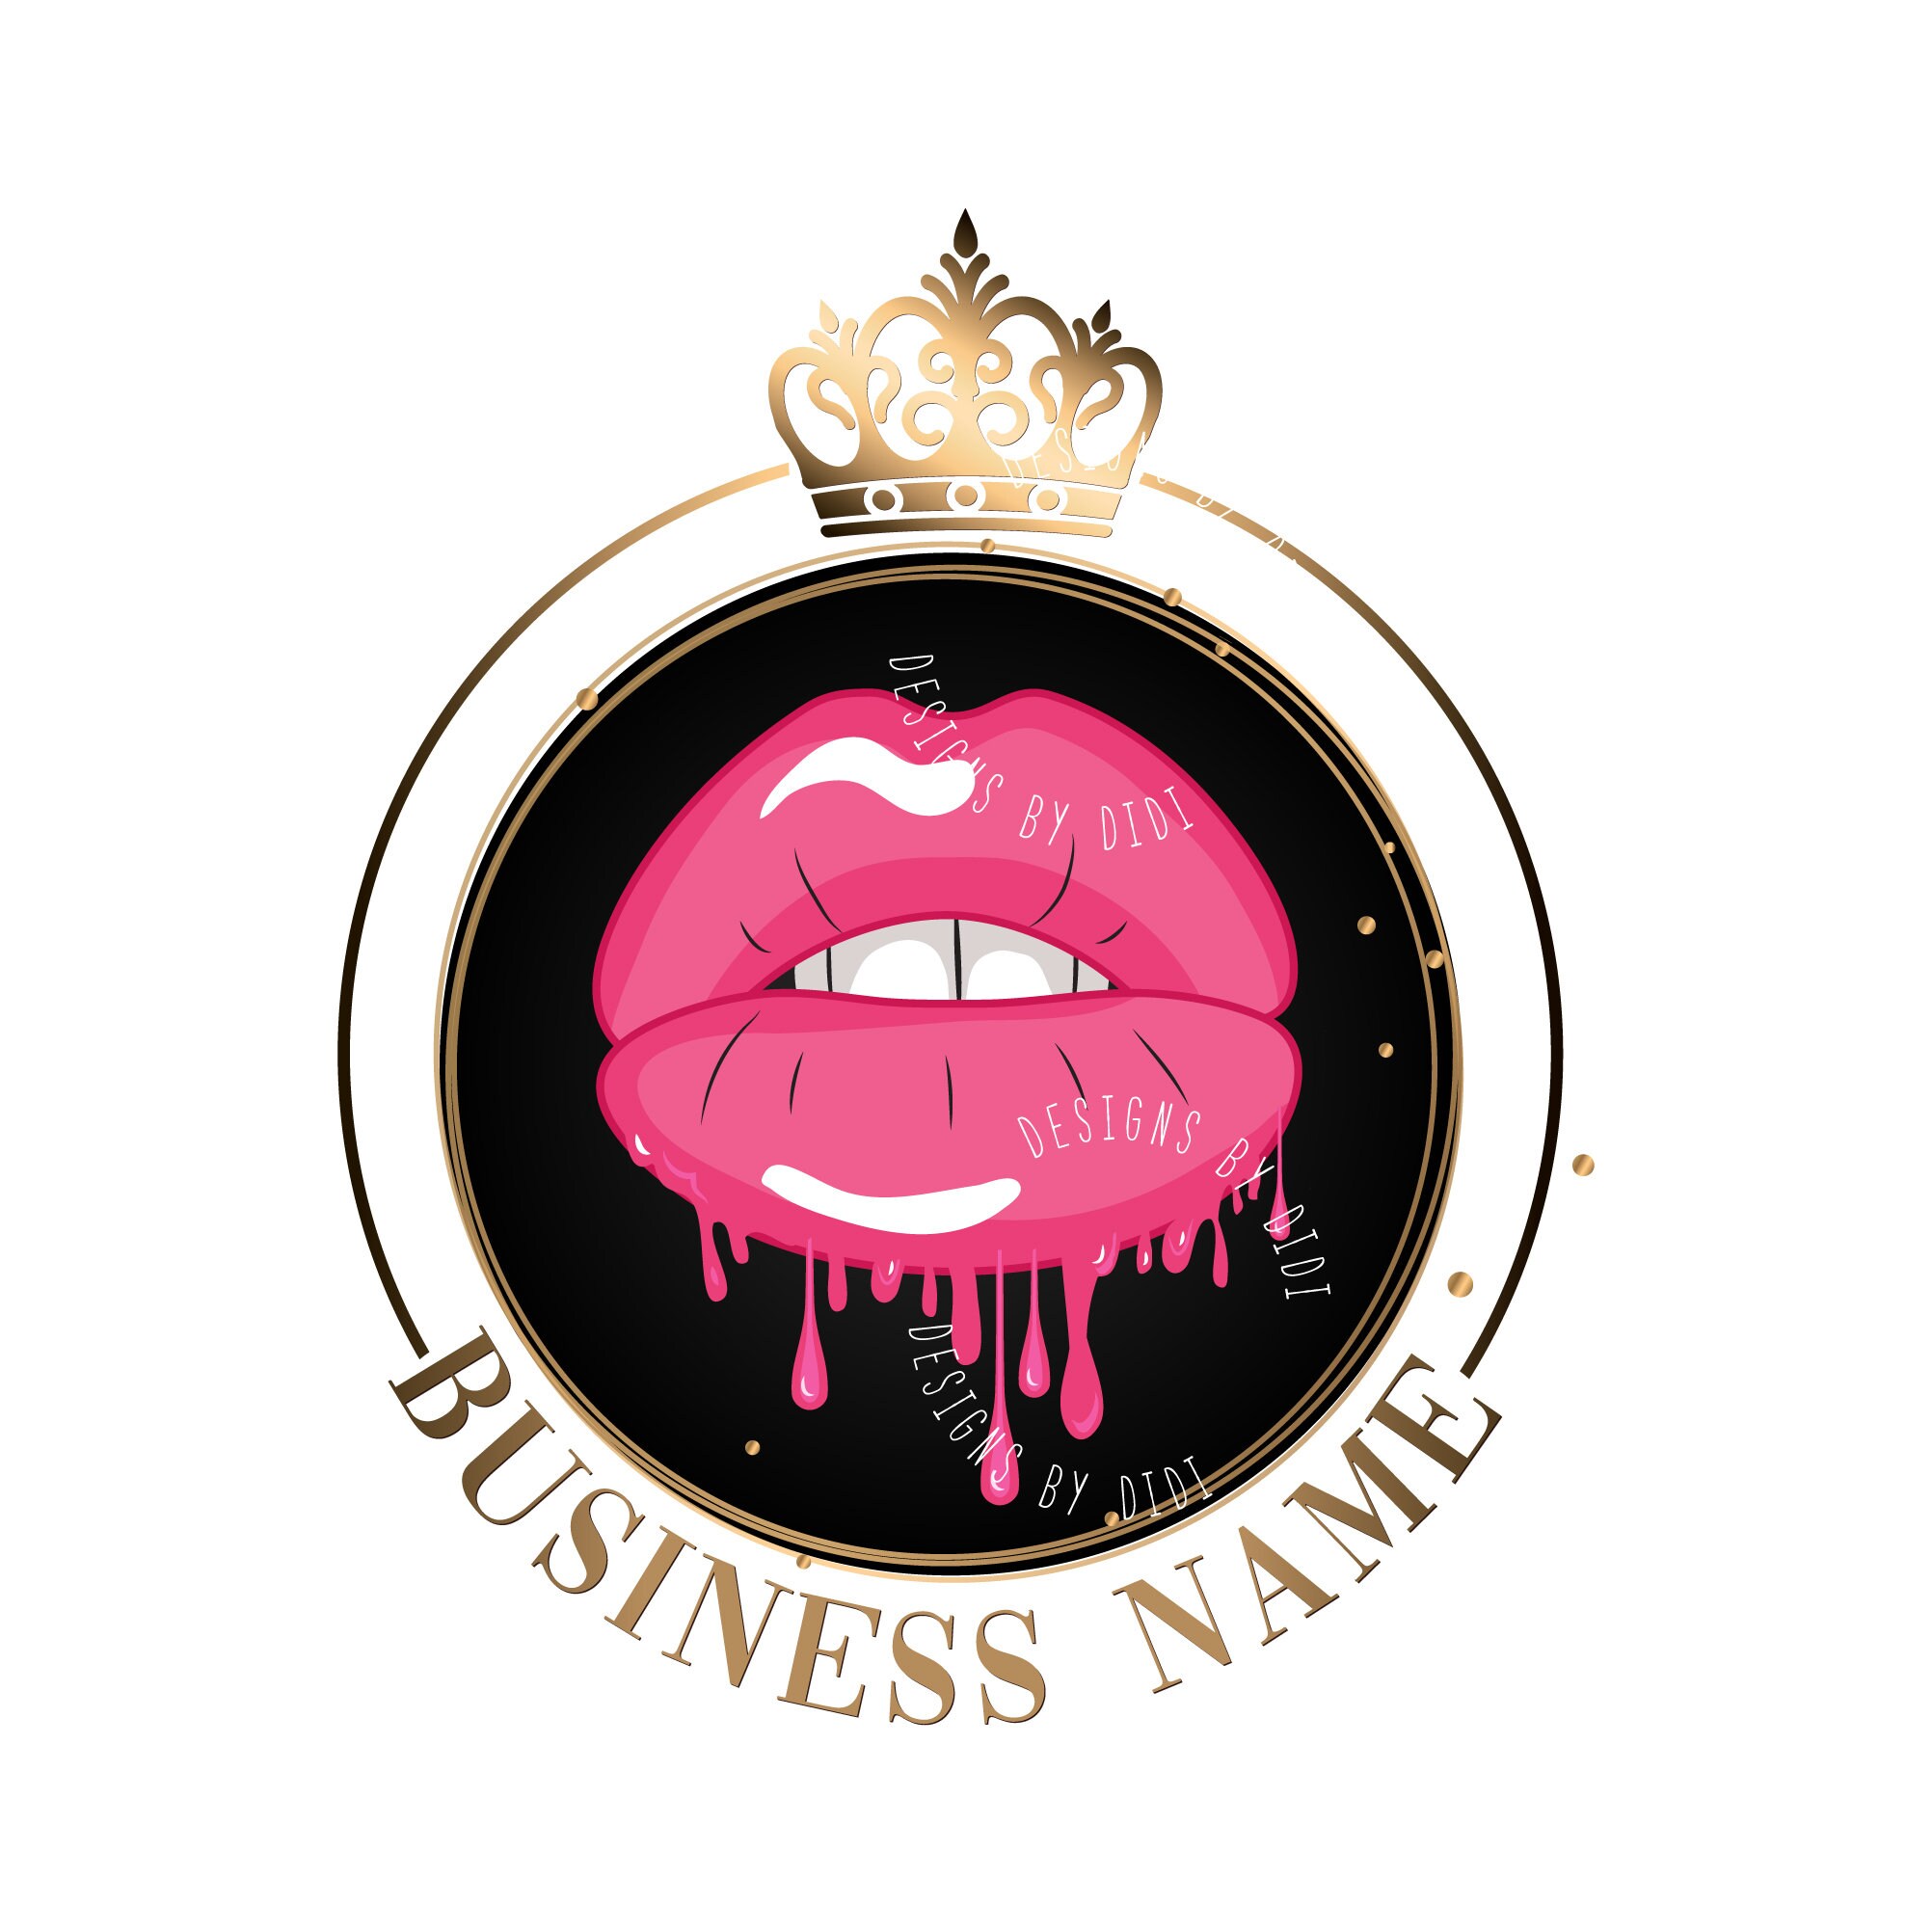 Dripping lips logo